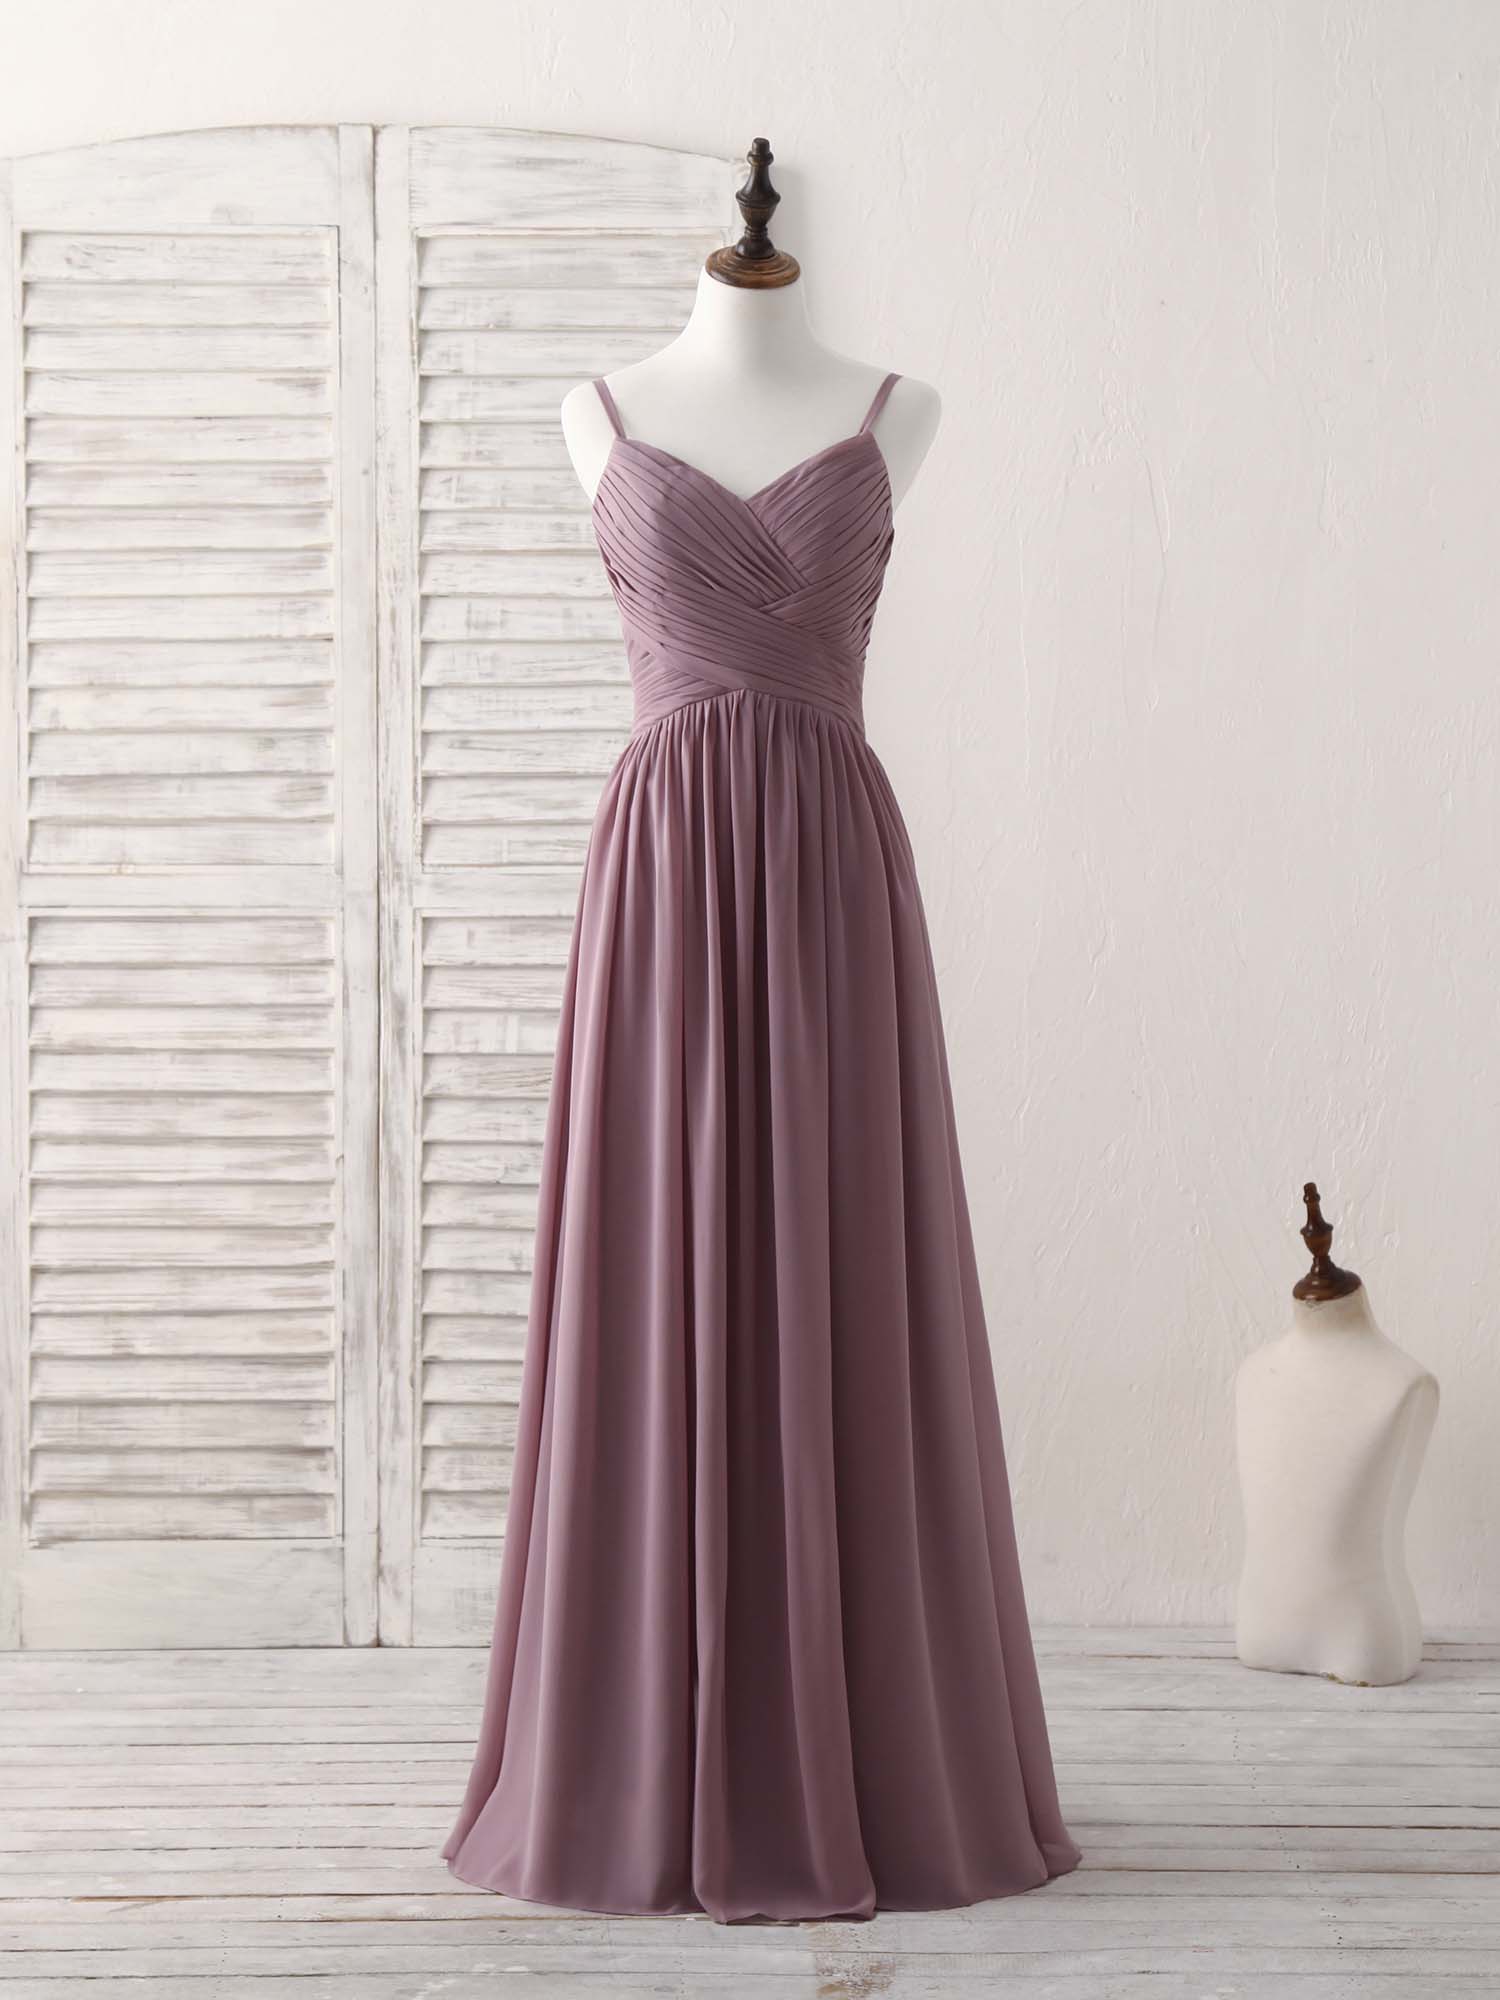 Party Dresses Glitter, Simple V Neck Chiffon Long Prom Dress Dark Pink Bridesmaid Dress